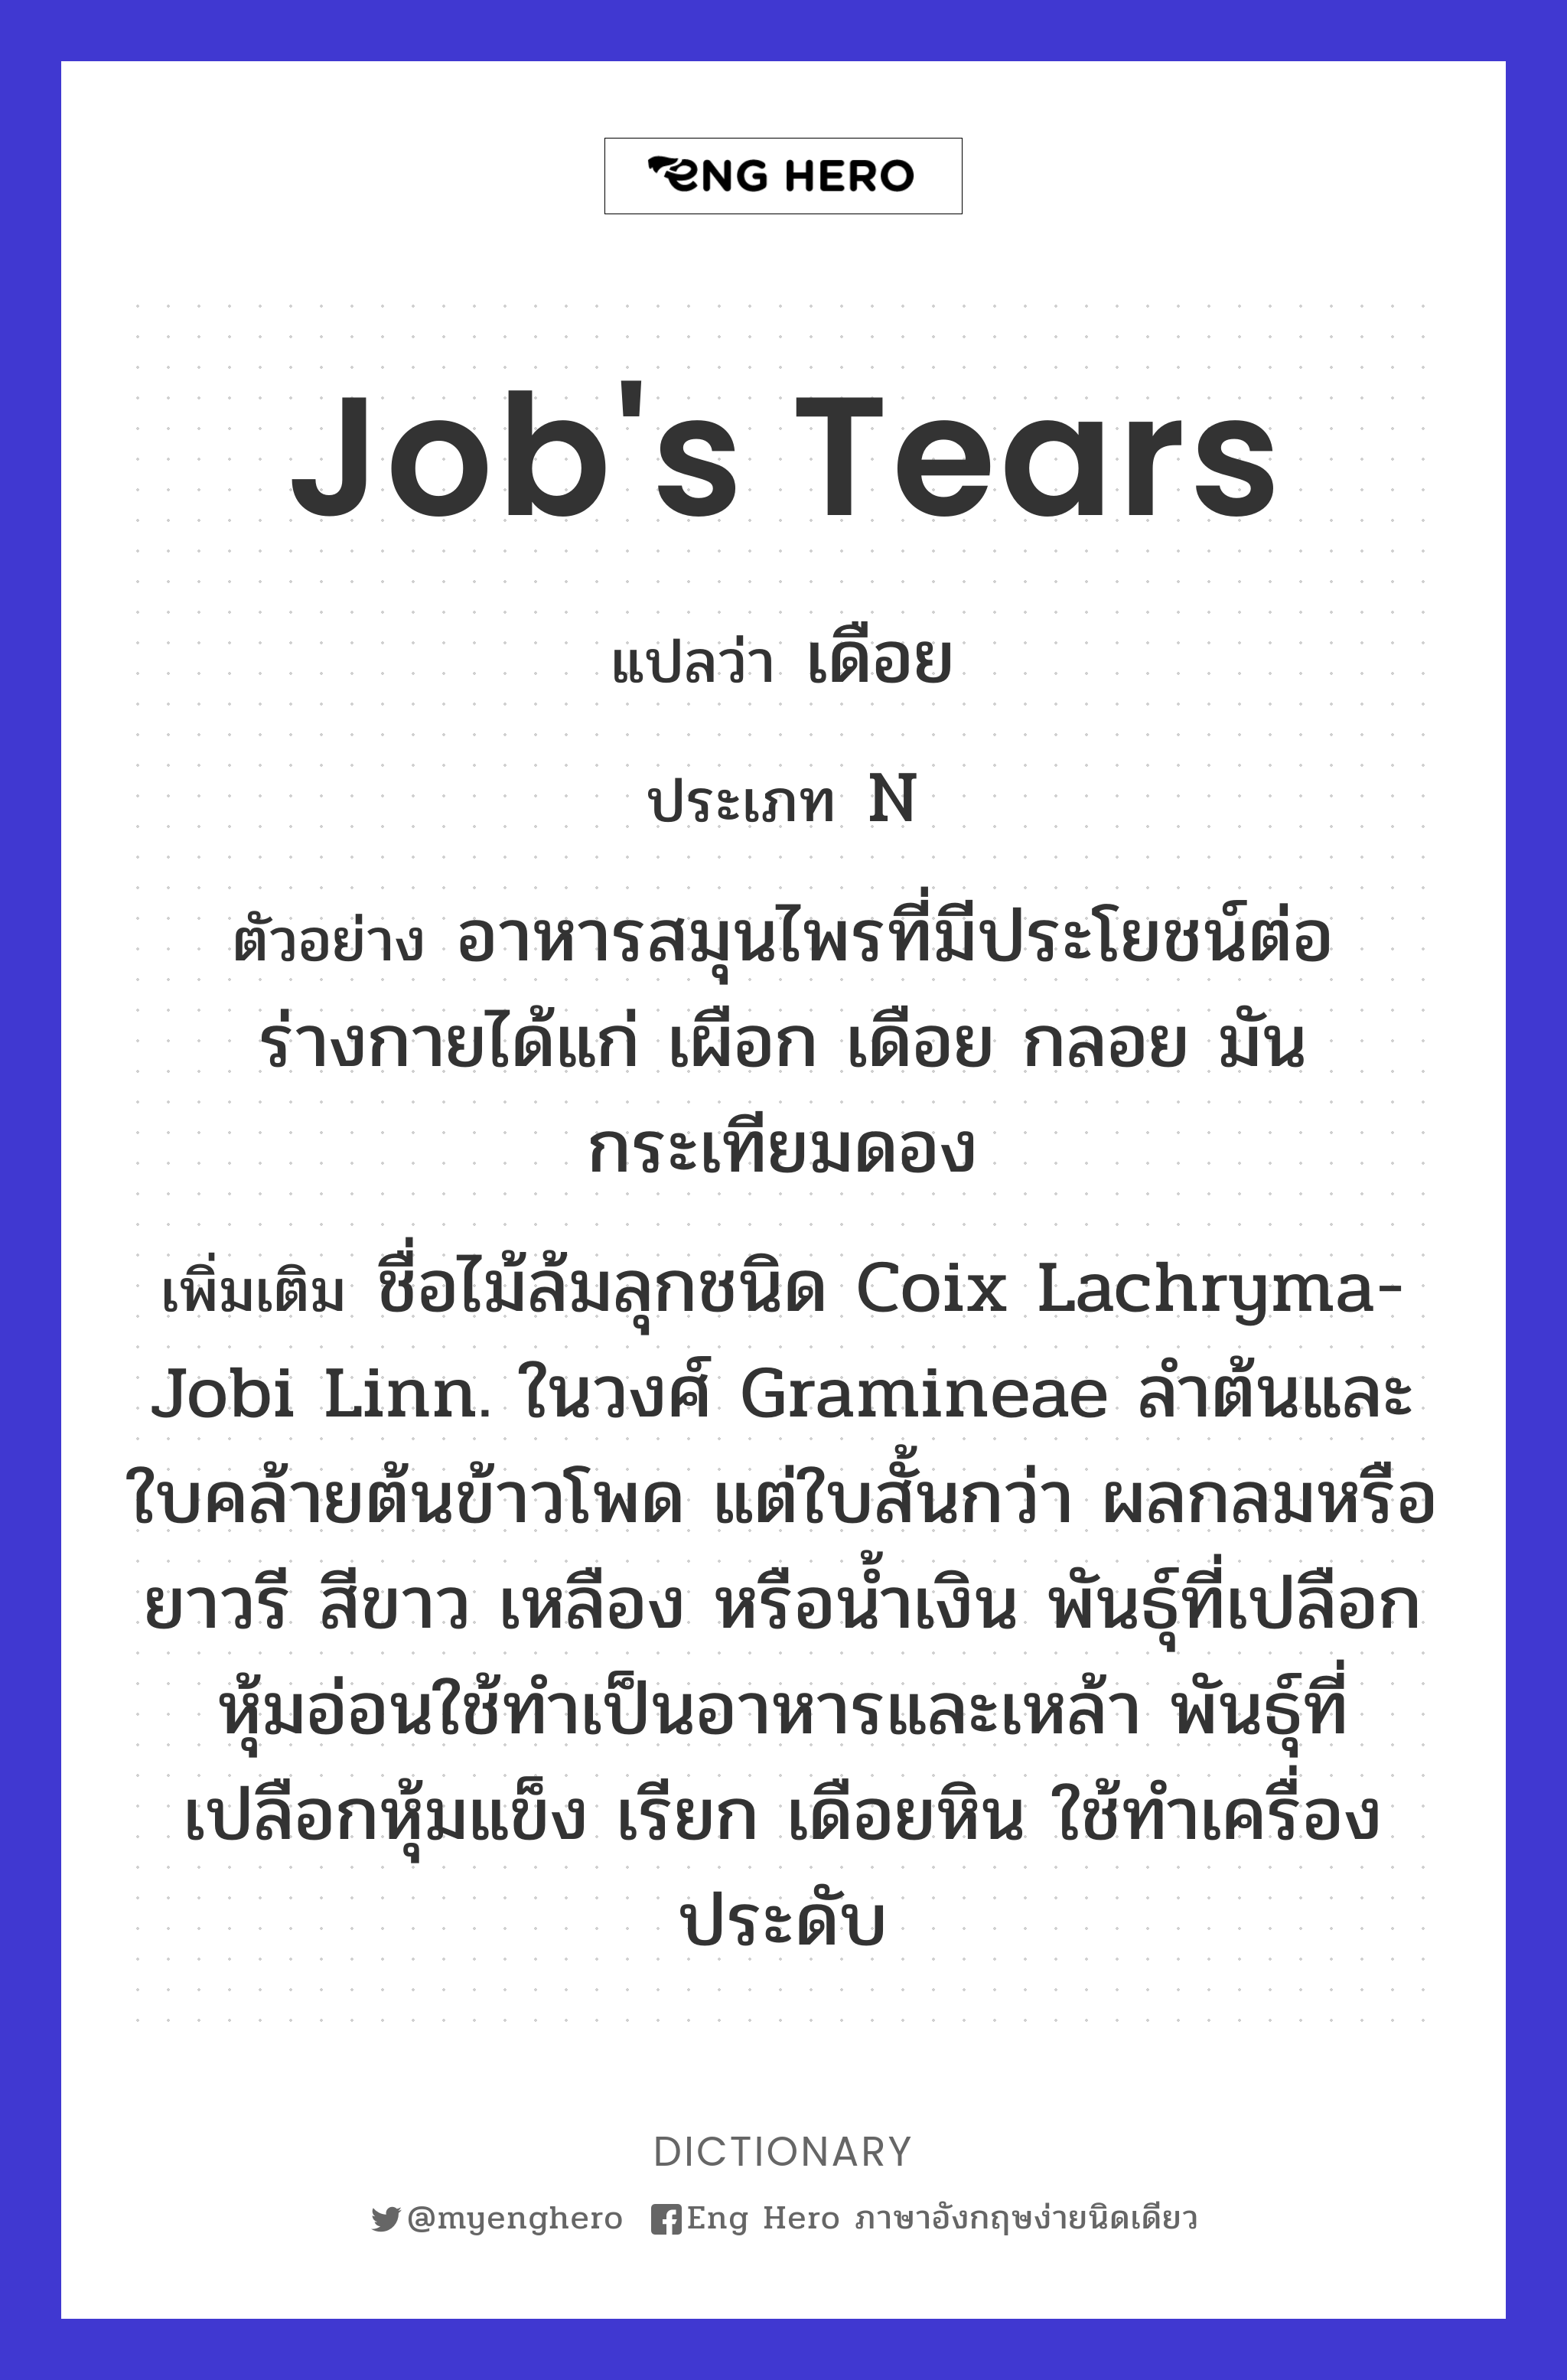 Job's tears